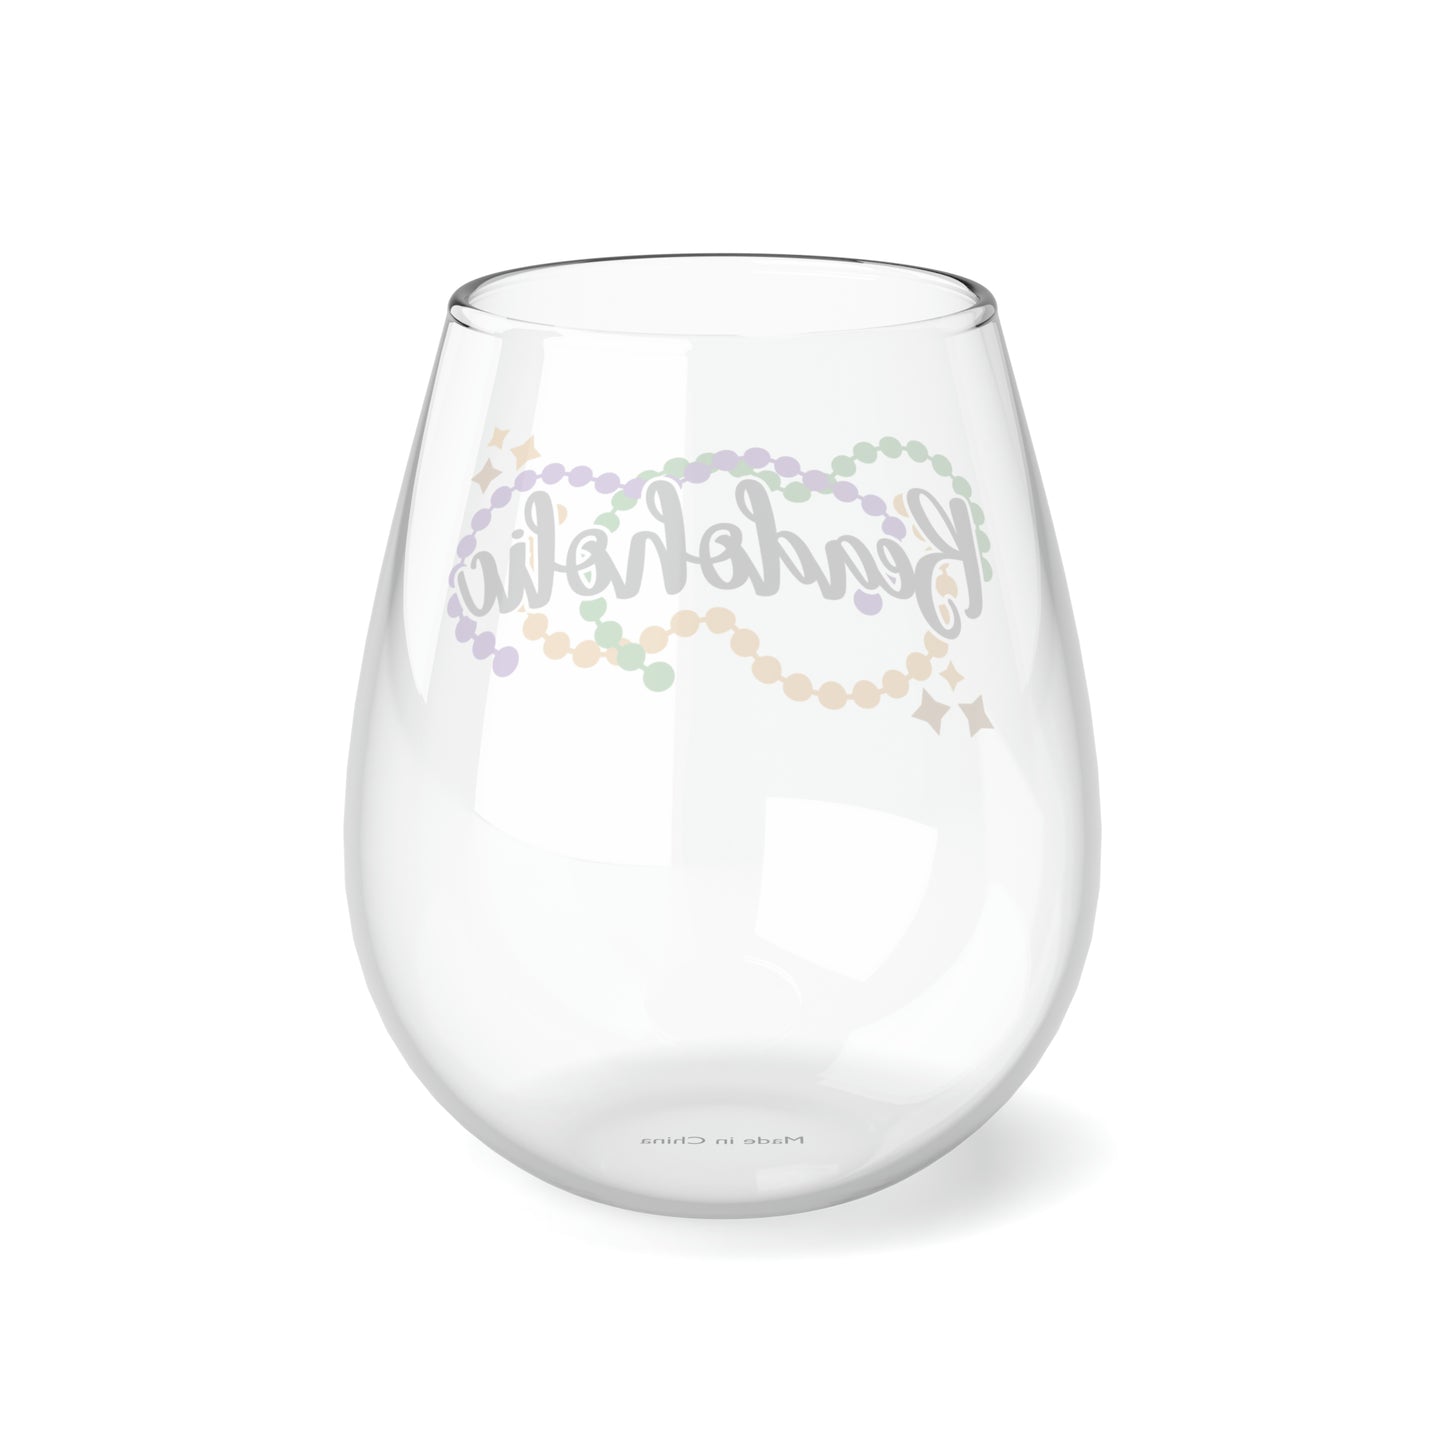 Beadoholic Stemless Wine Glass, 11.75oz